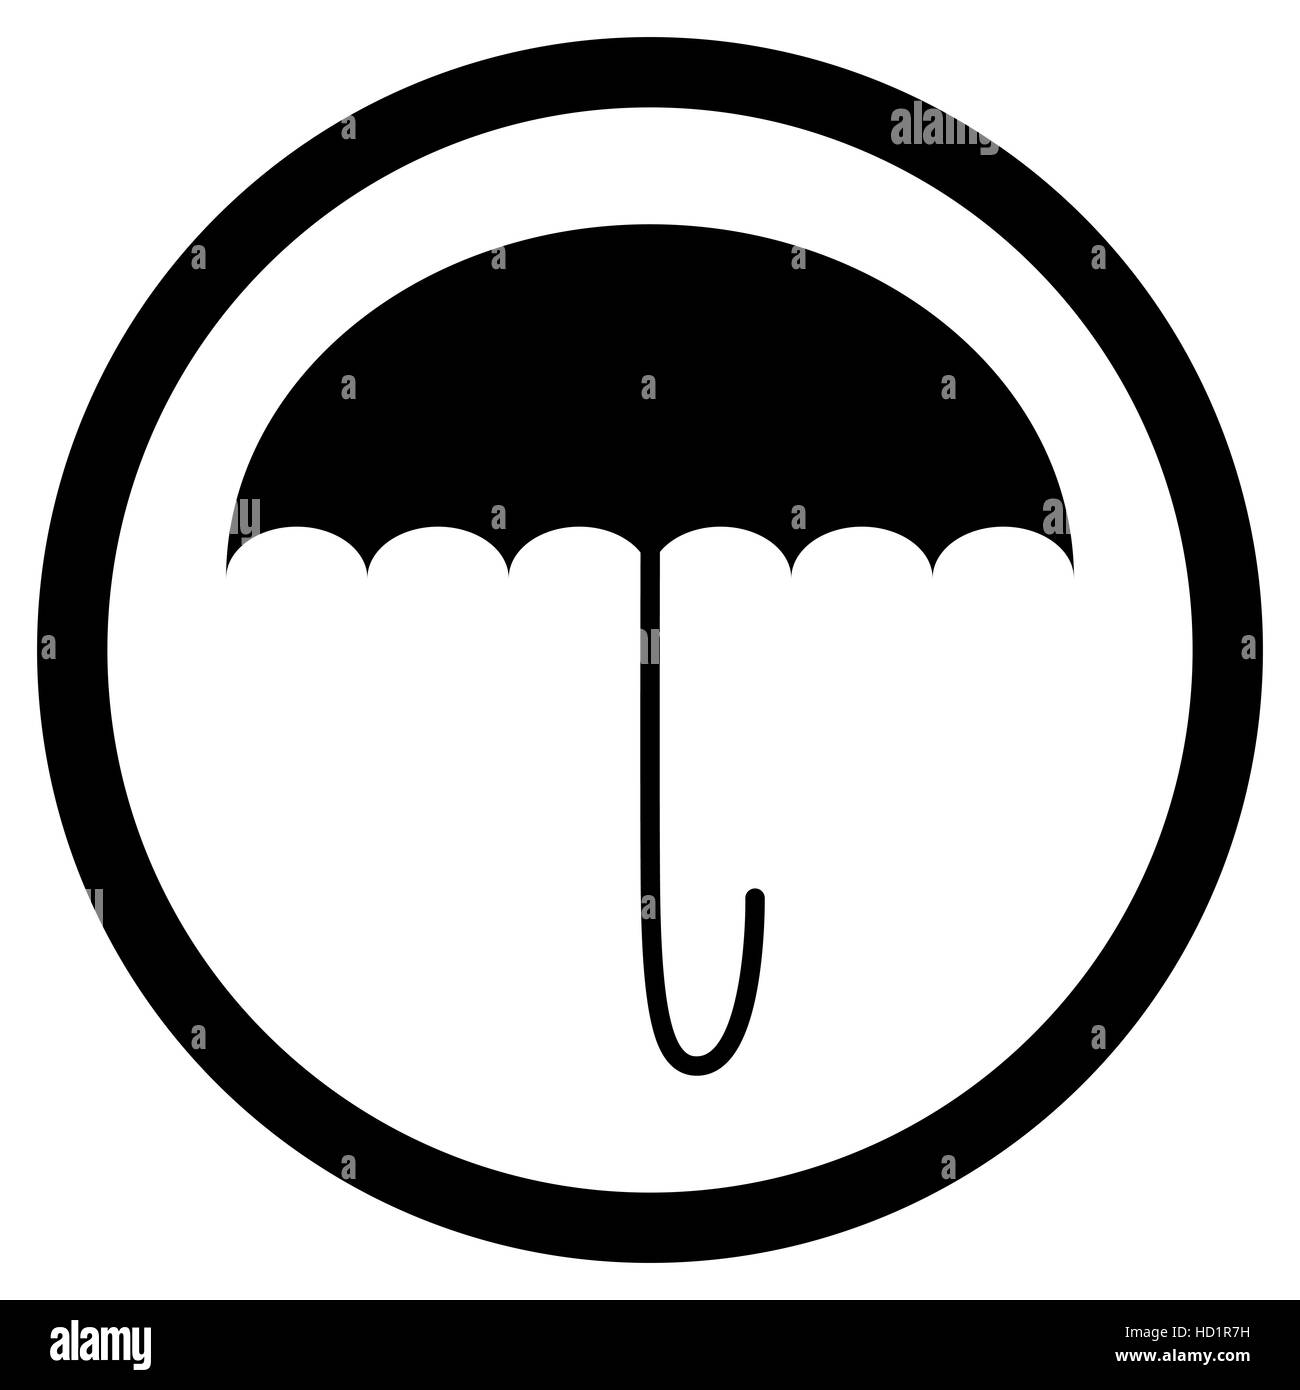 Umbrella icon black white. Insurance icon, umbrella vector and protection icon, insurance umbrella illustration Stock Photo